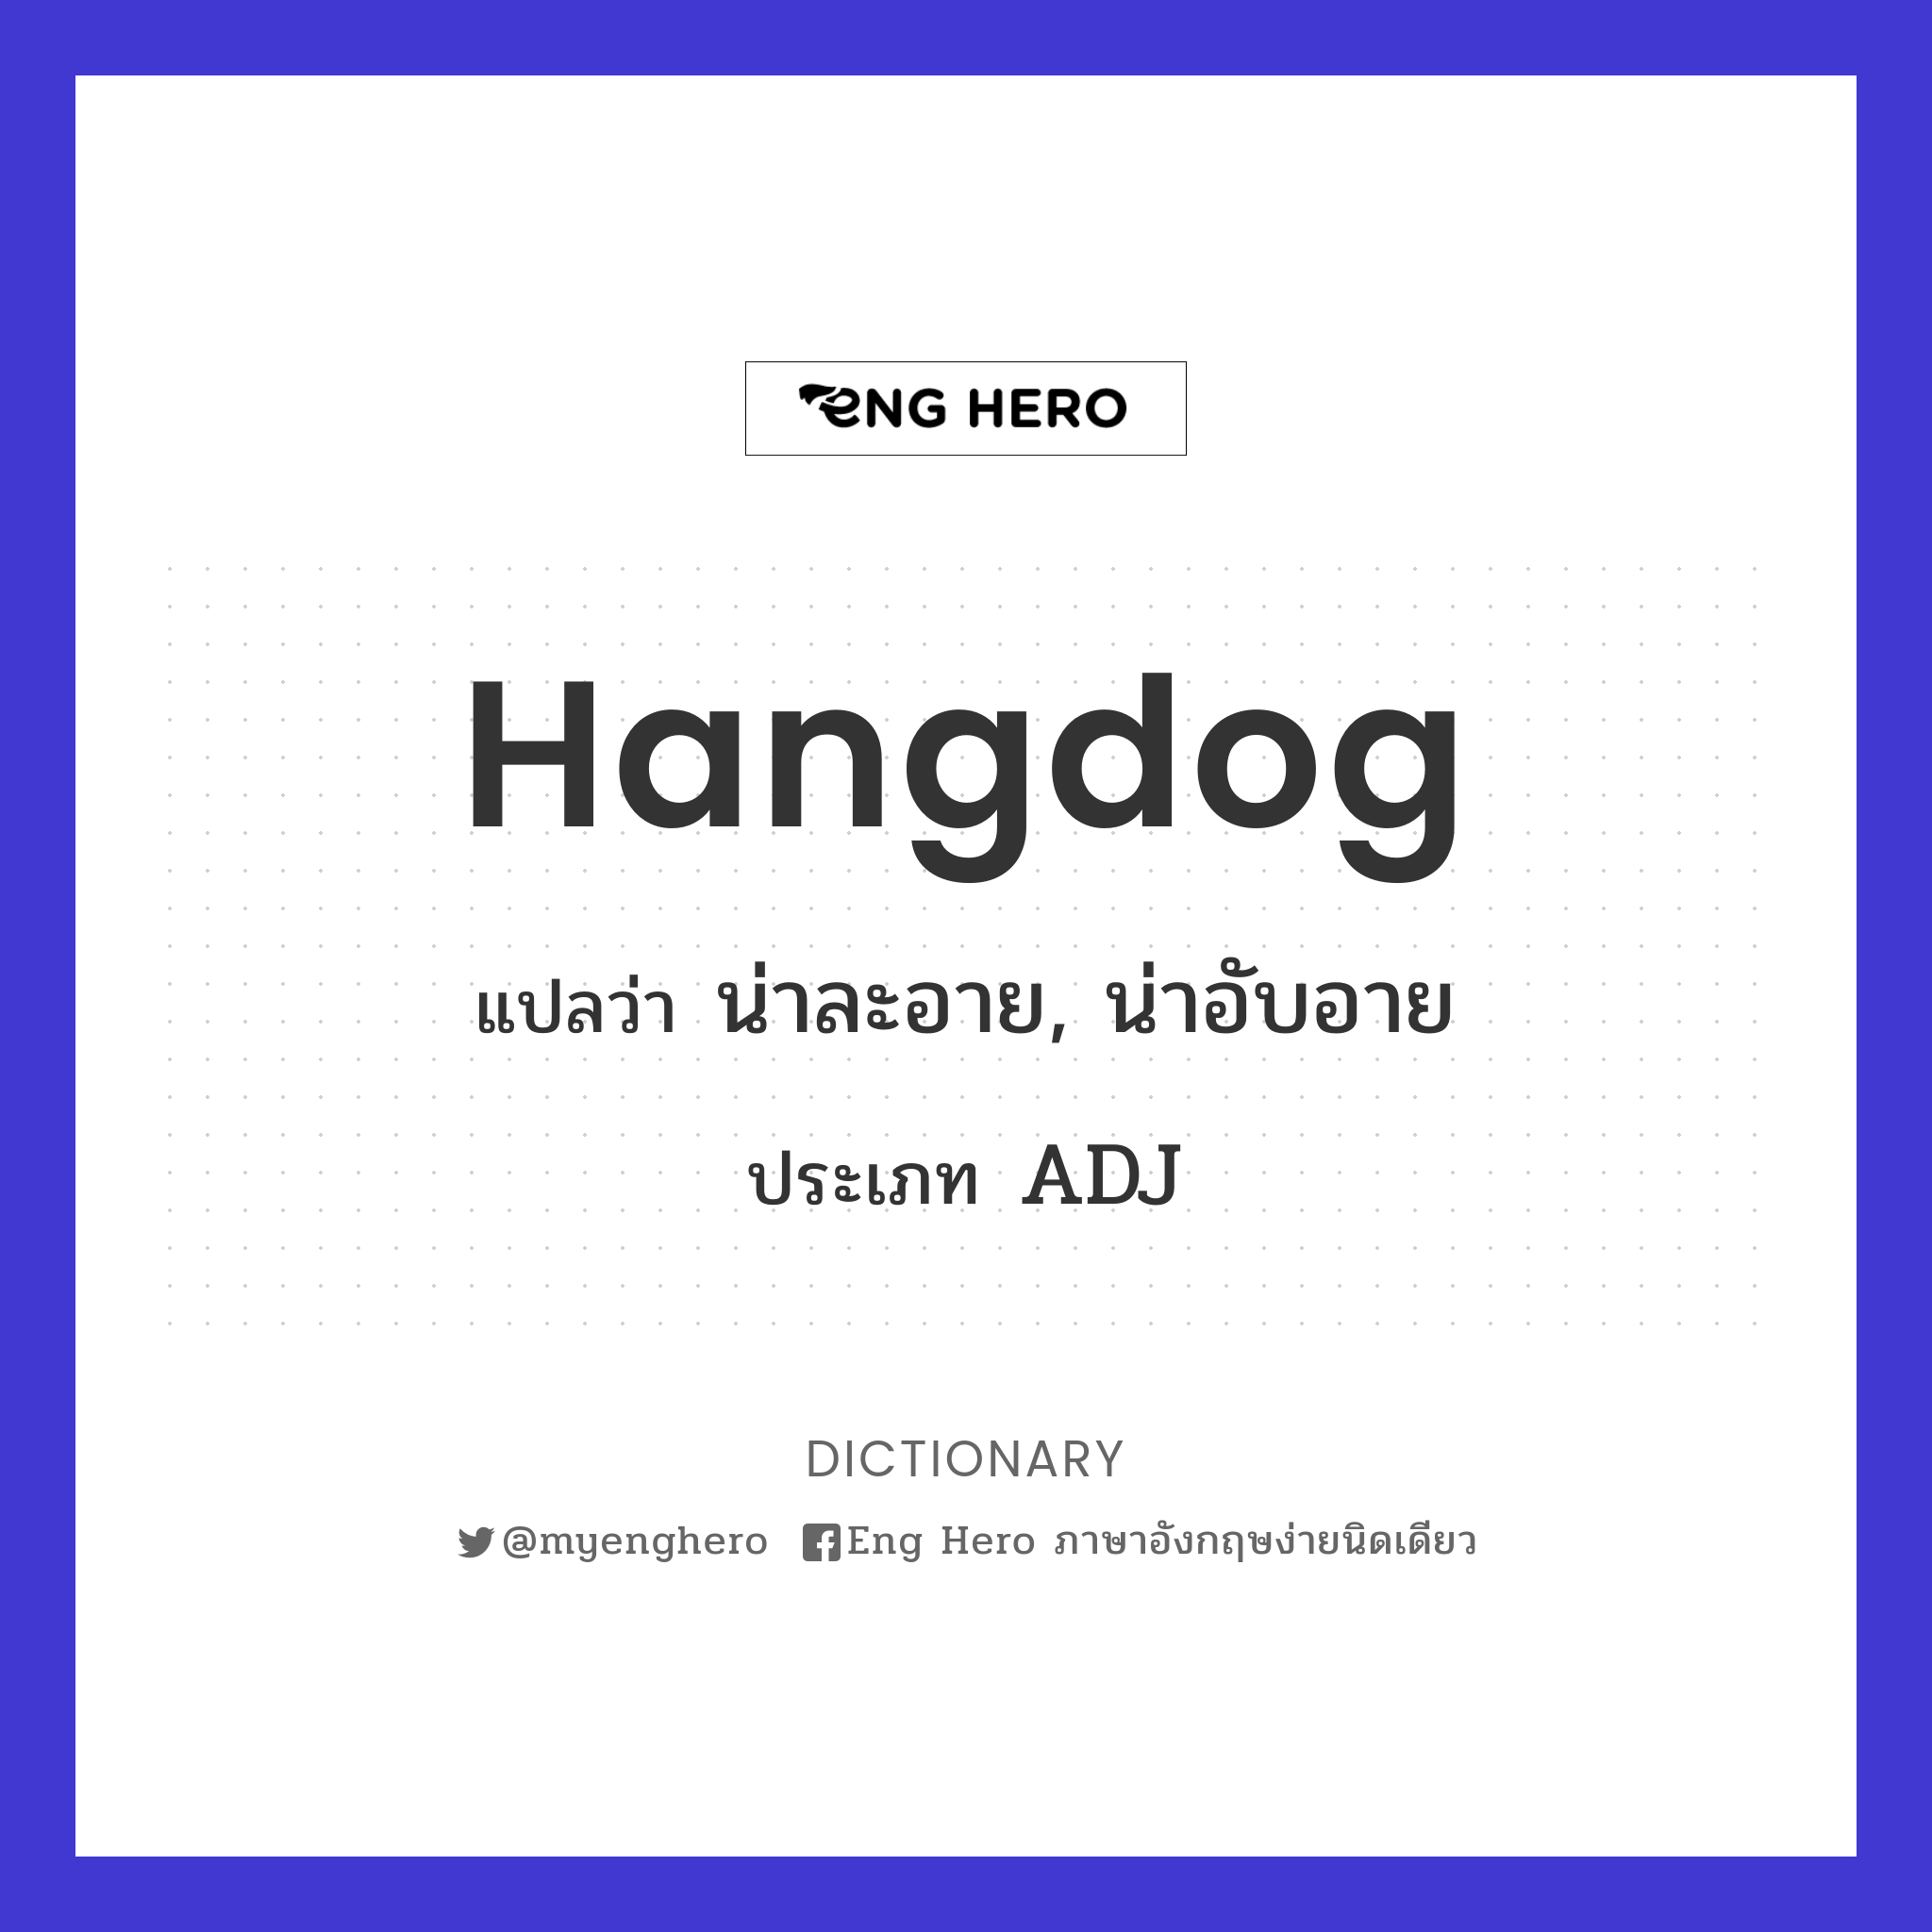 hangdog